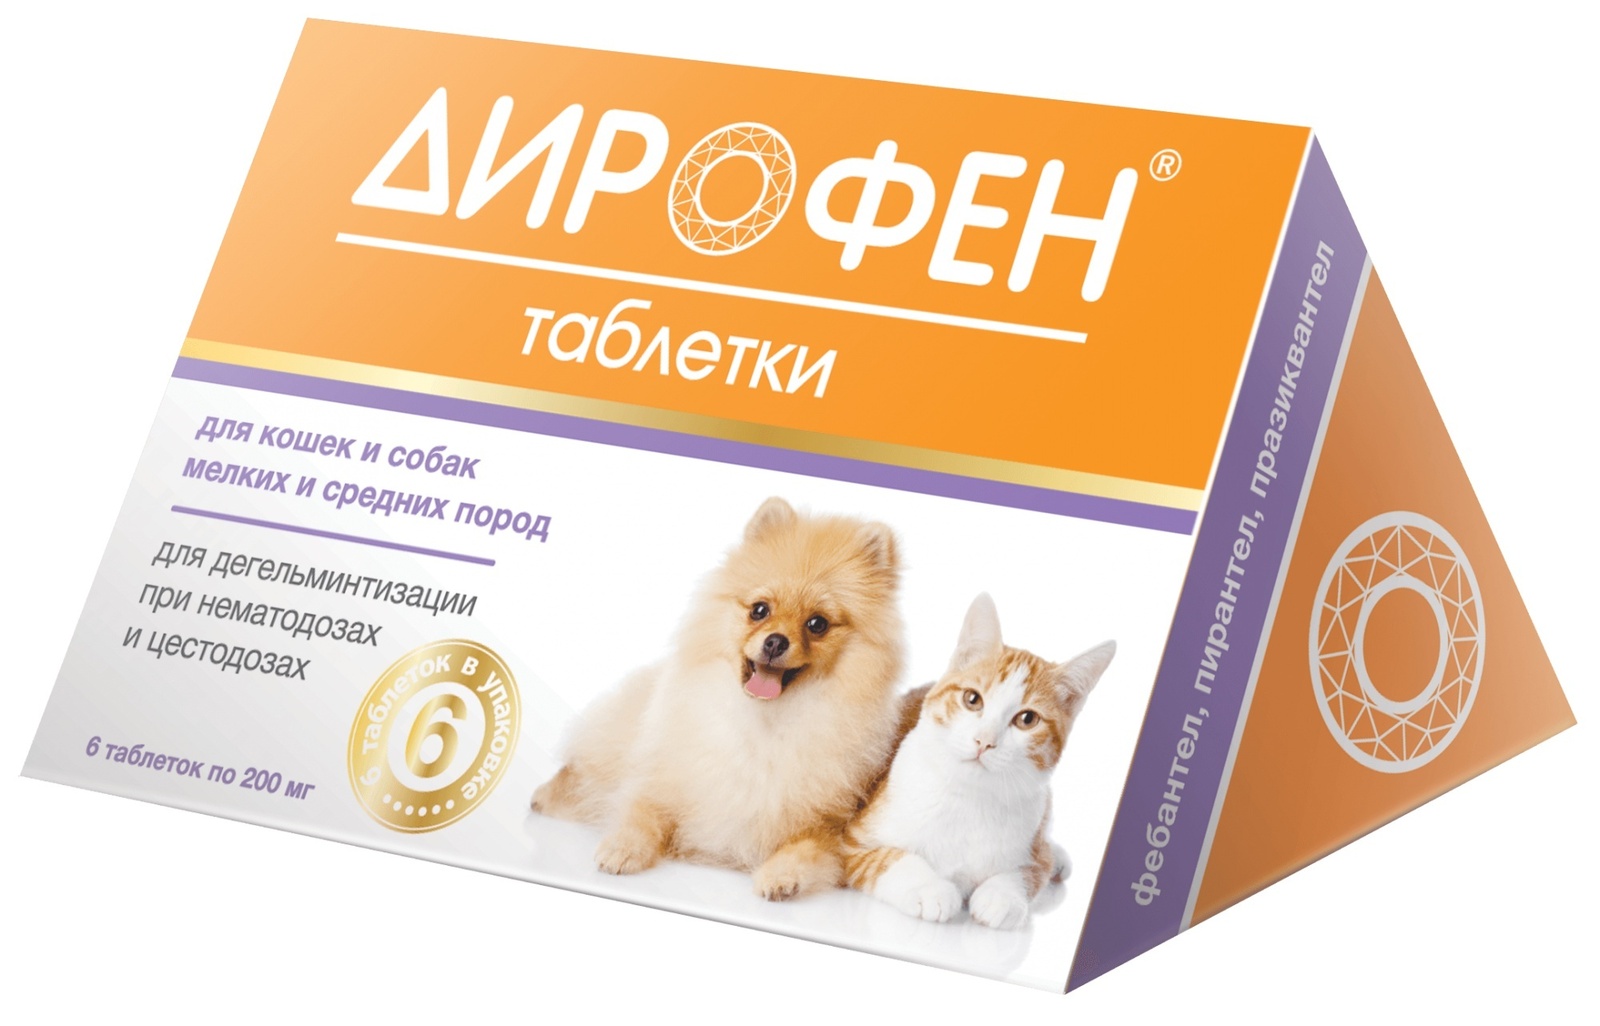 Apicenna дирофен плюс таблетки от глистов для кошек и собак (11 г) Apicenna дирофен плюс таблетки от глистов для кошек и собак (11 г) - фото 1